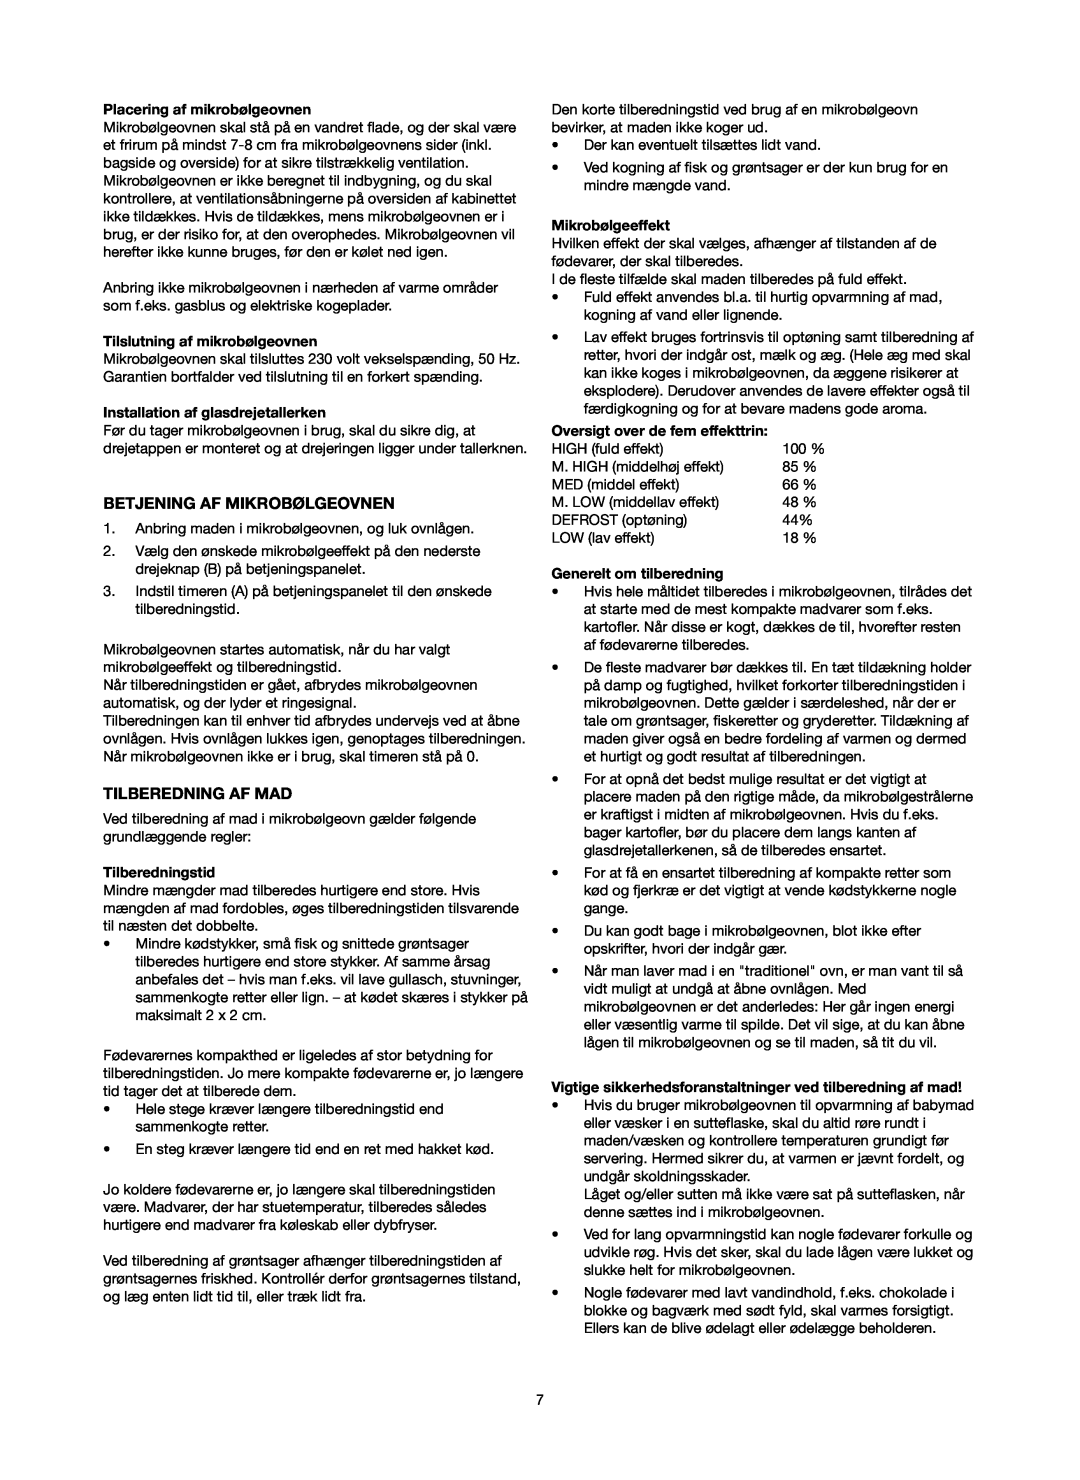 Melissa 753-097 manual Betjening Af Mikrobølgeovnen, Tilberedning Af Mad, Placering af mikrobølgeovnen, Tilberedningstid 